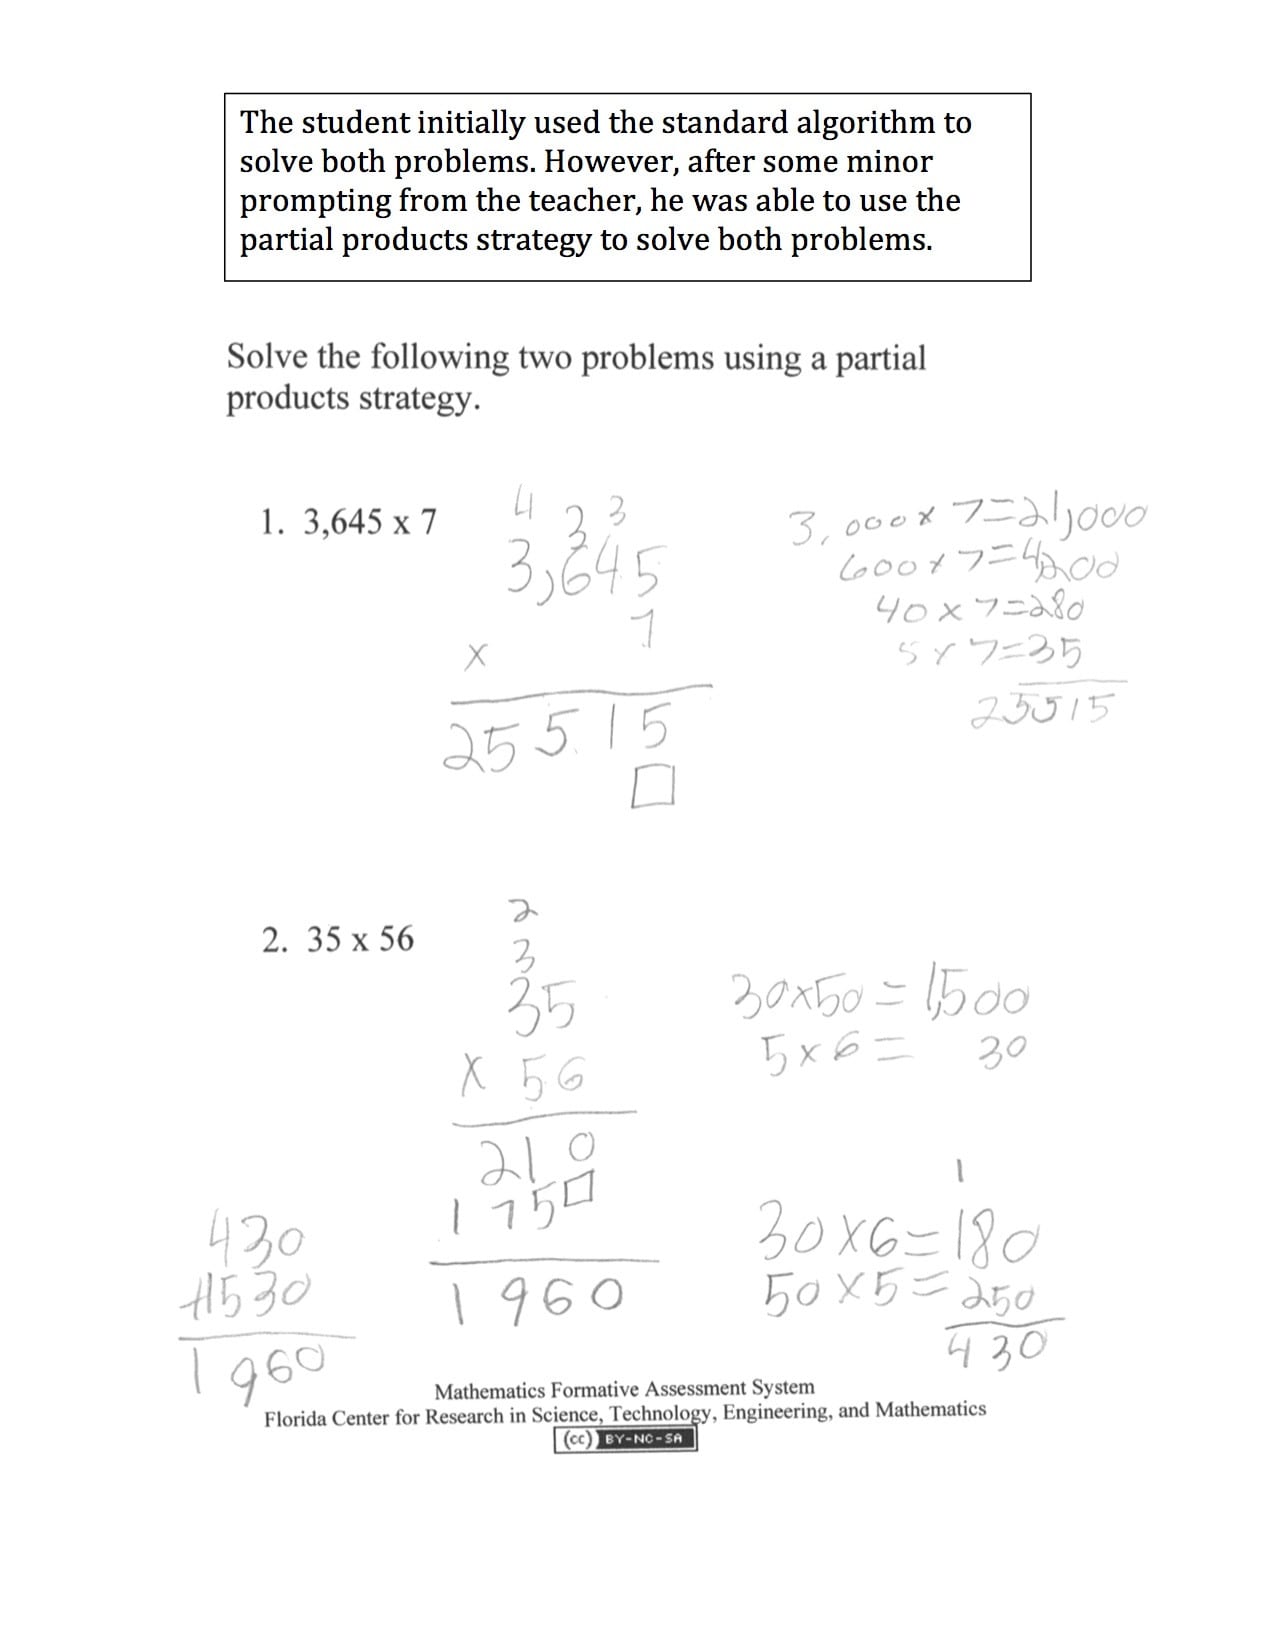 Lakecountrymn  Multiplication Problems 3Rd Grade